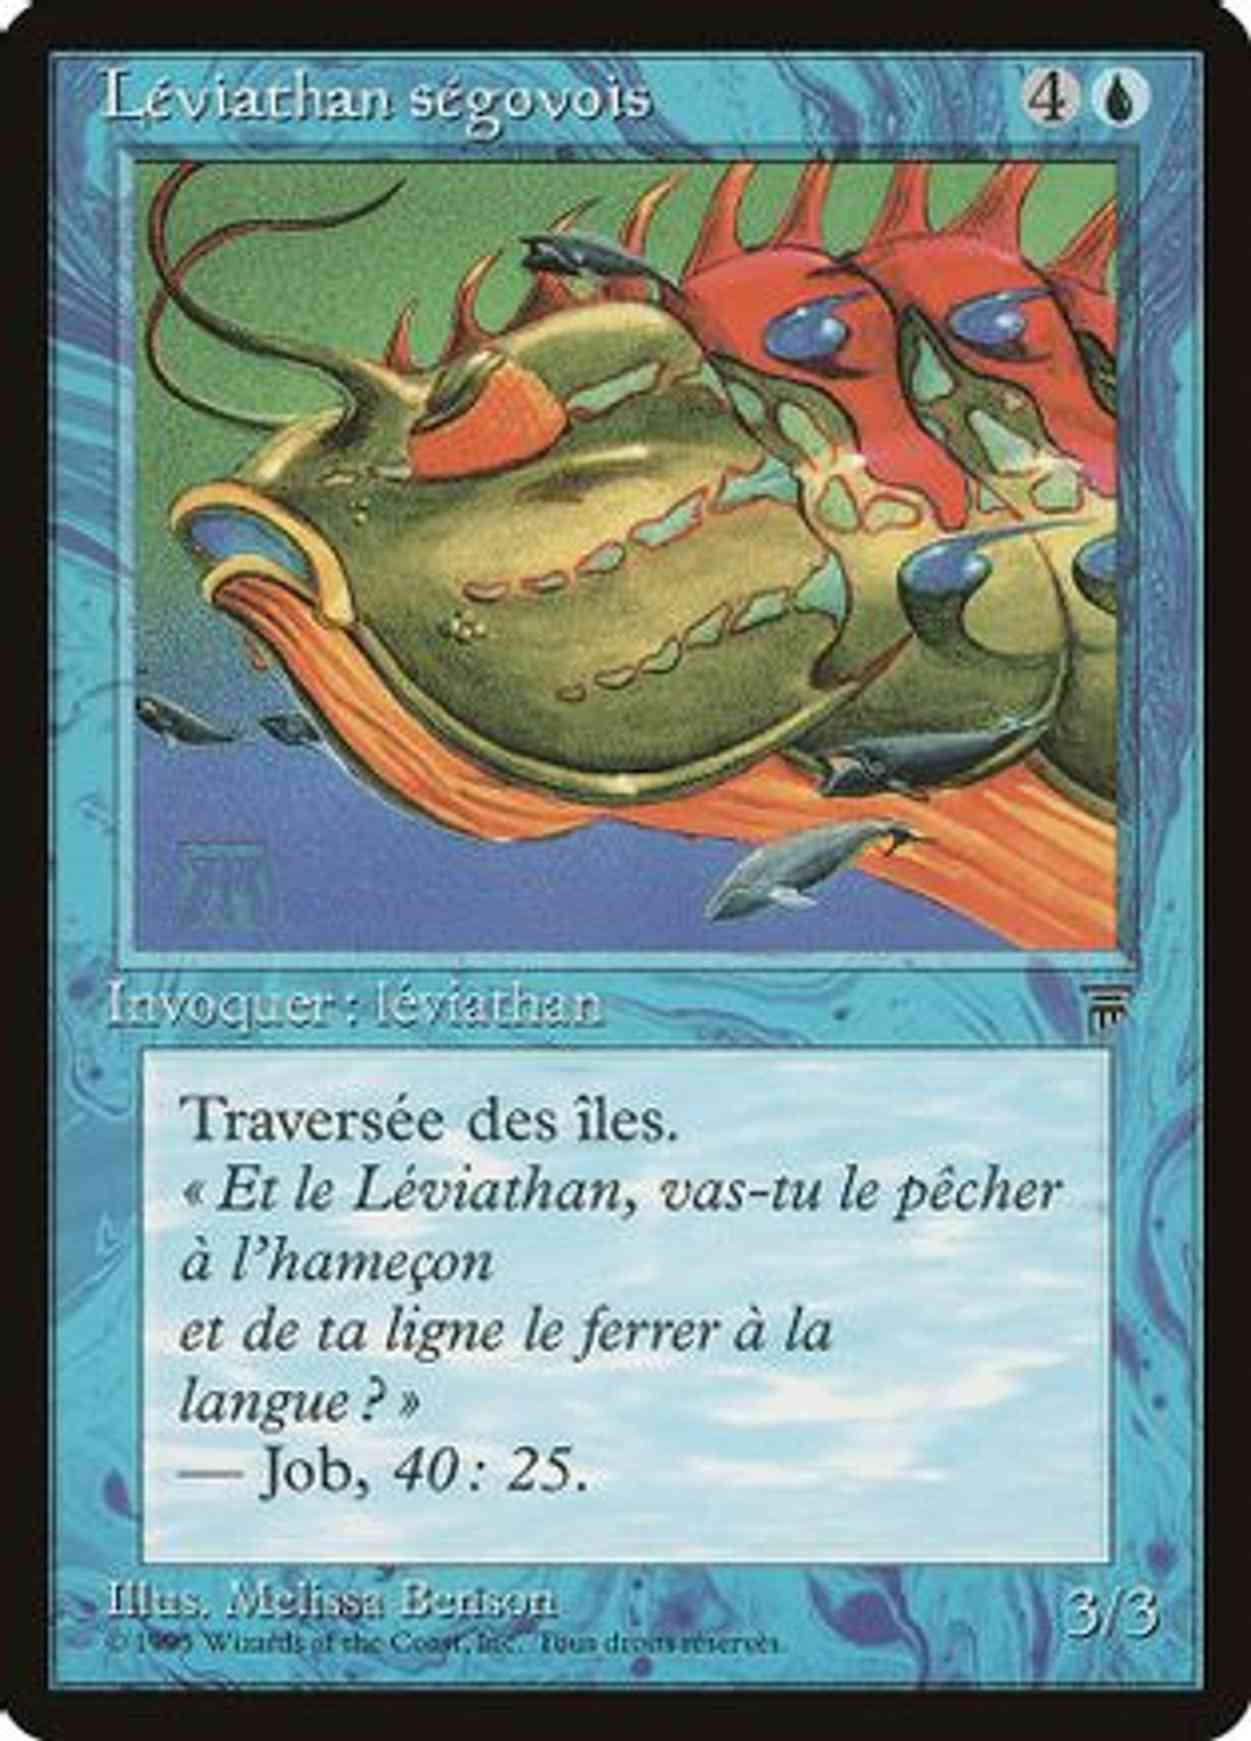 Segovian Leviathan (French) - "Leviathan segovois" magic card front